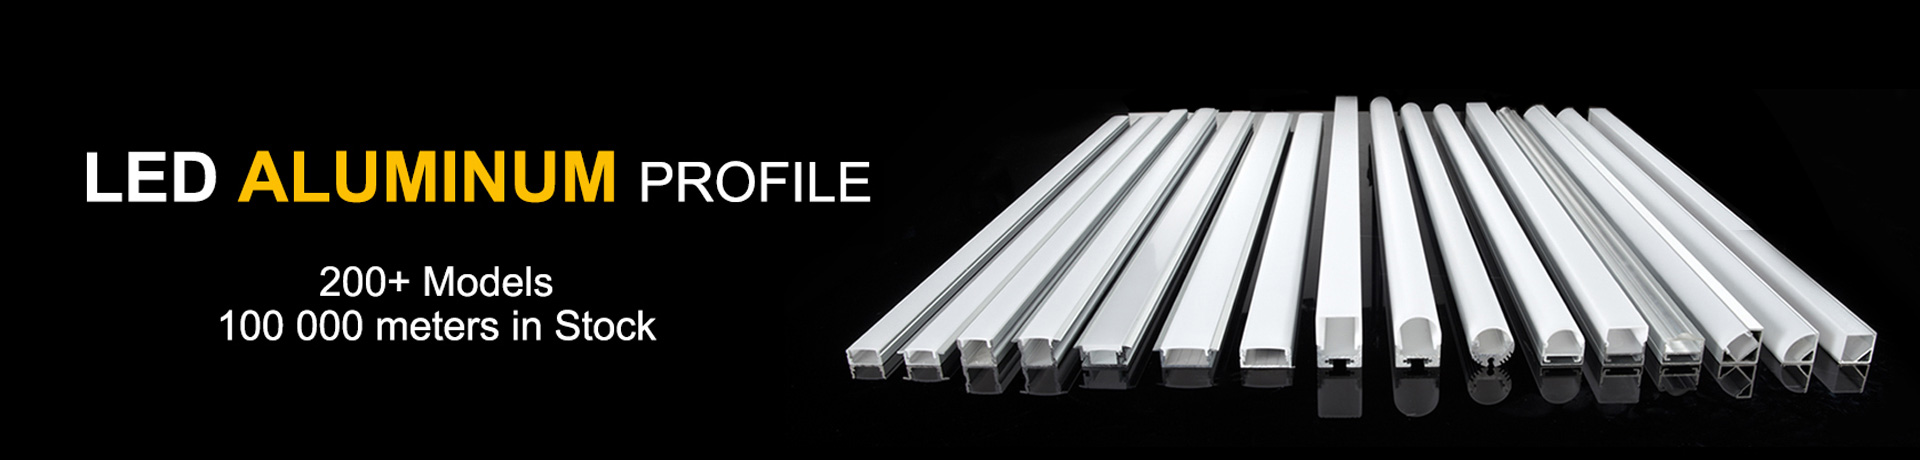 perfil de alumínio led - Canal de alumínio - Perfil de alumínio para iluminação LED Strip